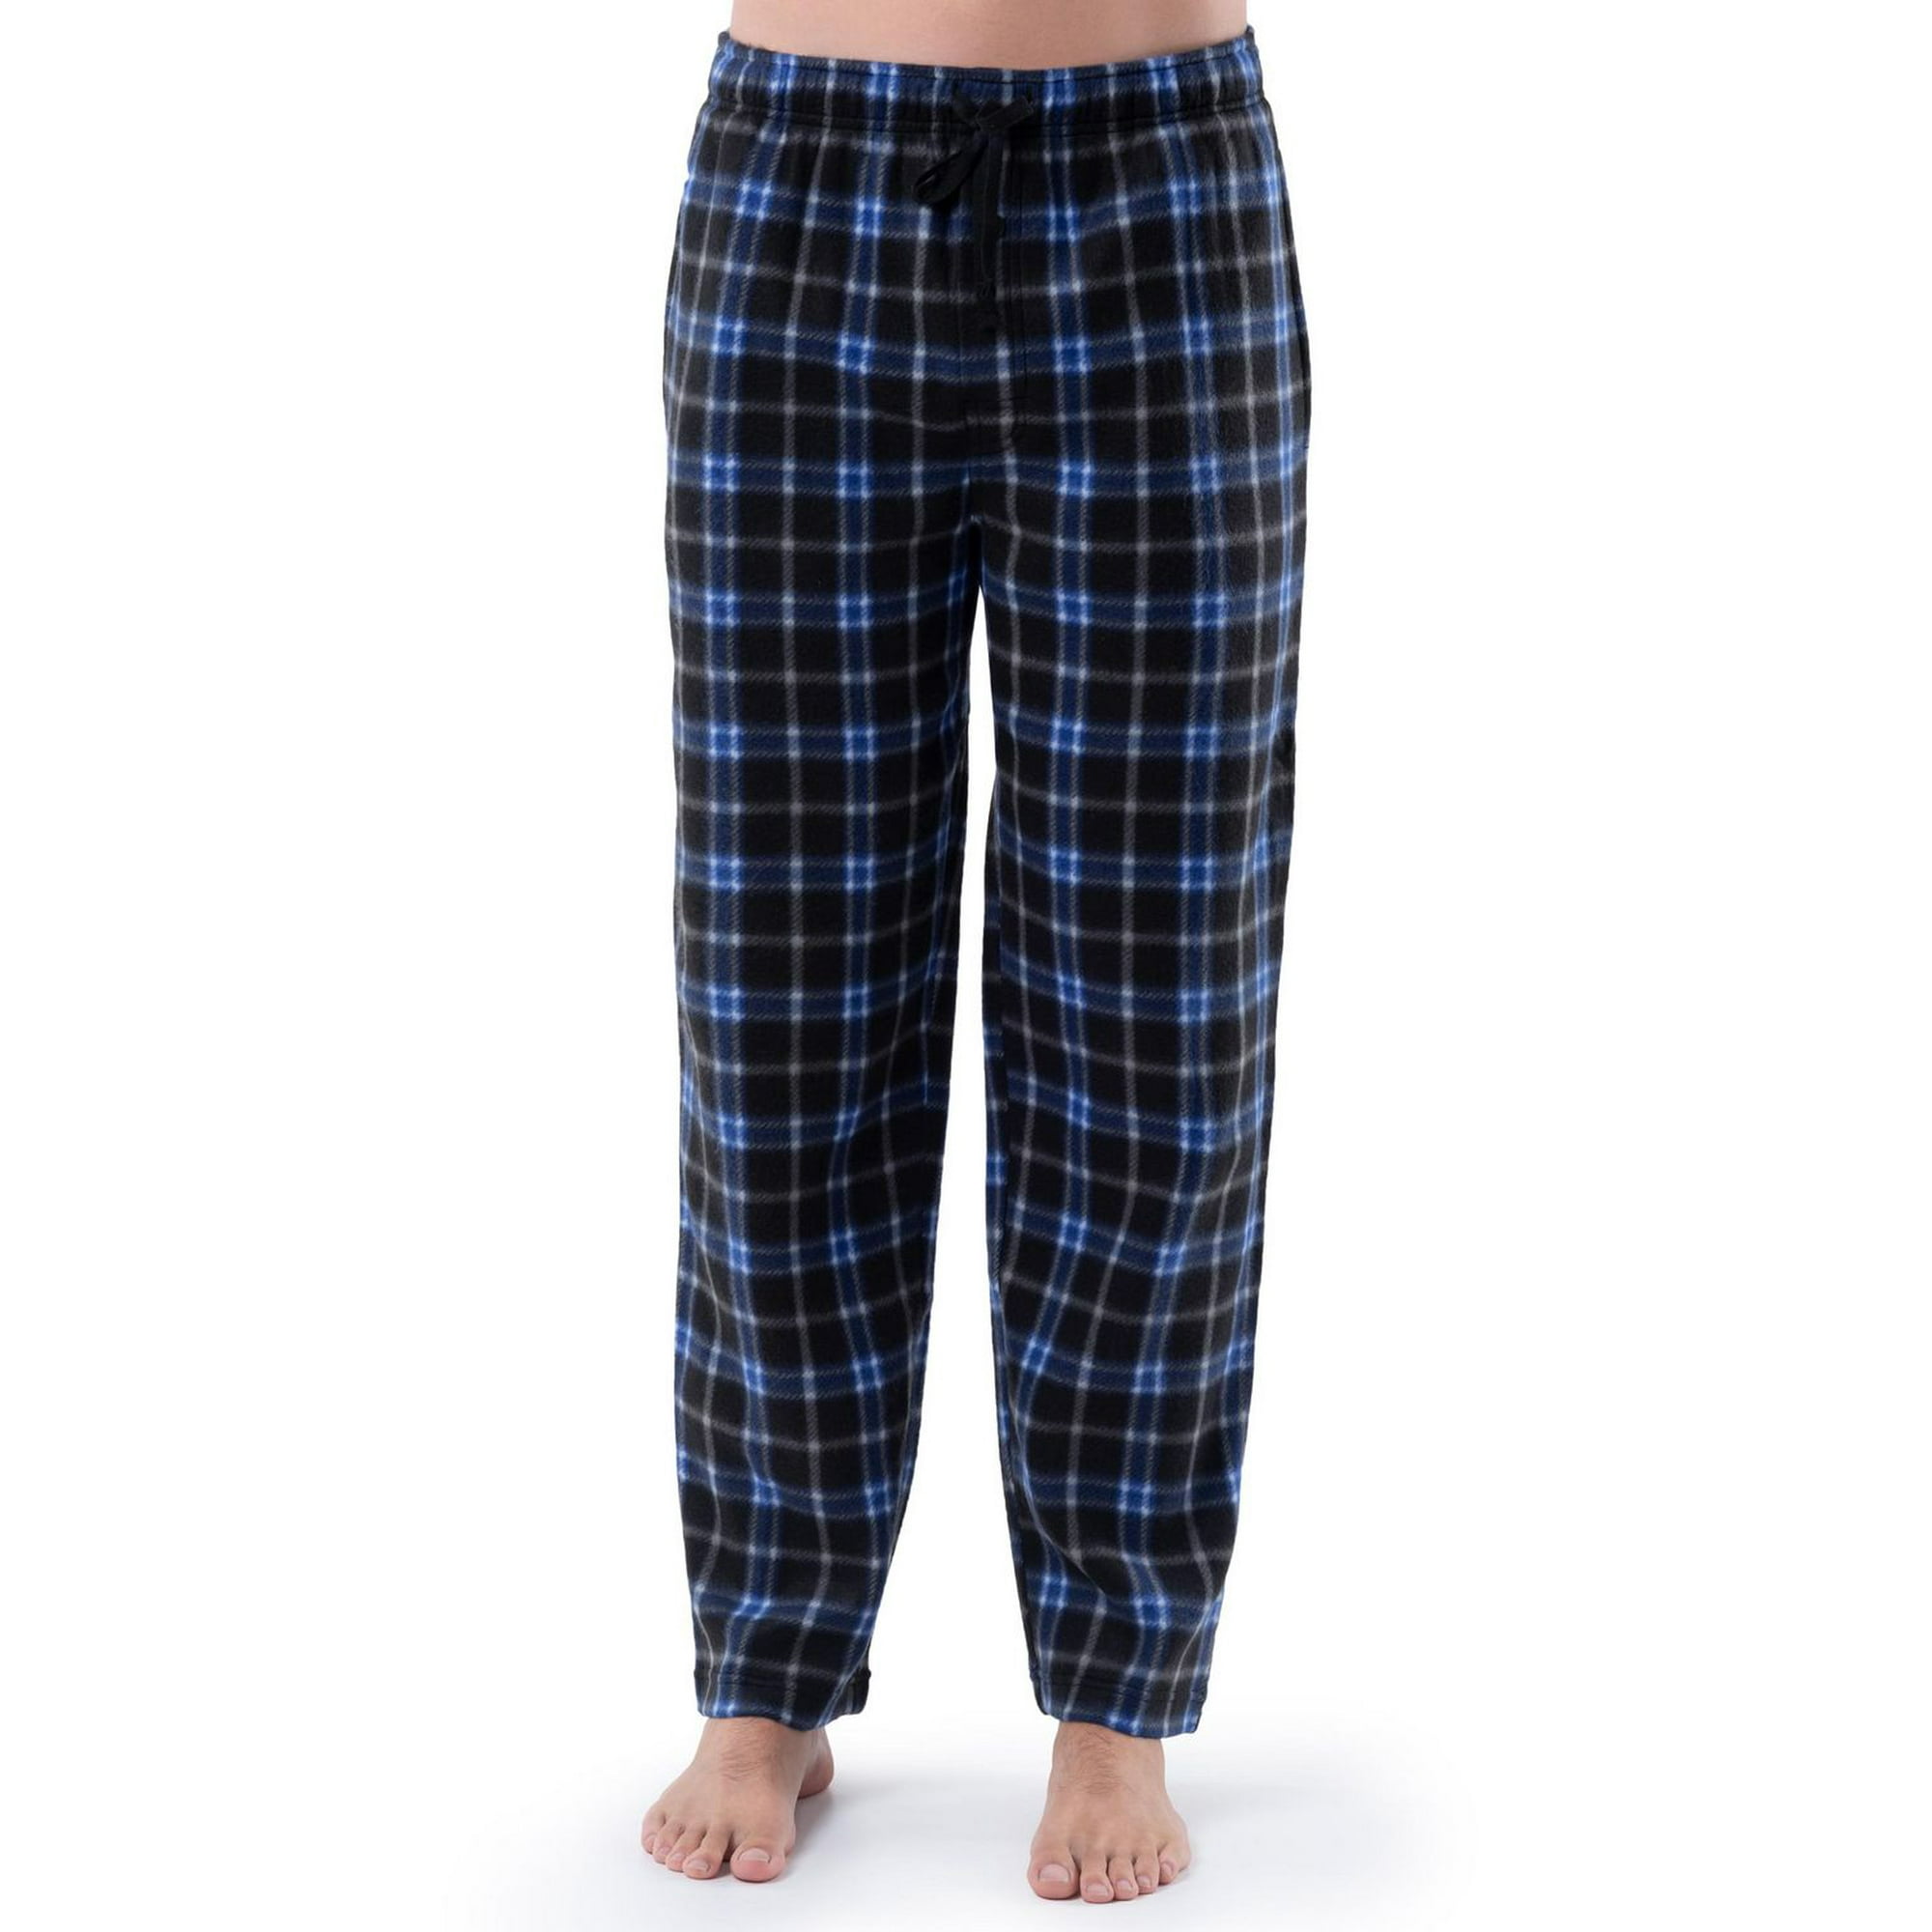 100% Cotton Pajama Bottoms – Sleep All Night